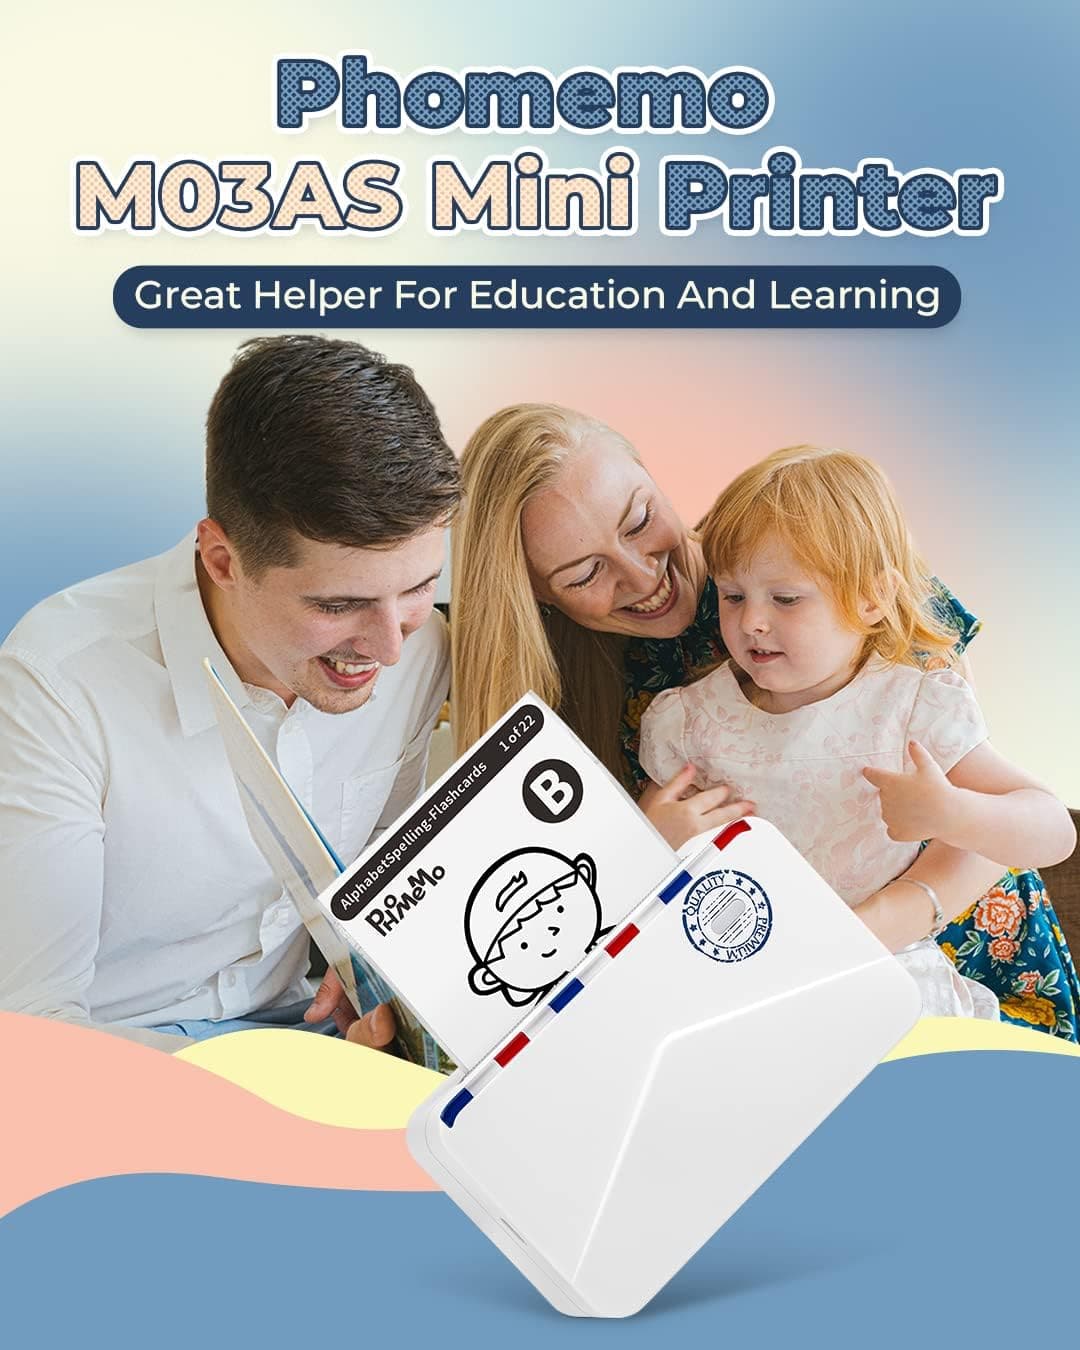 M03AS Portable Printer